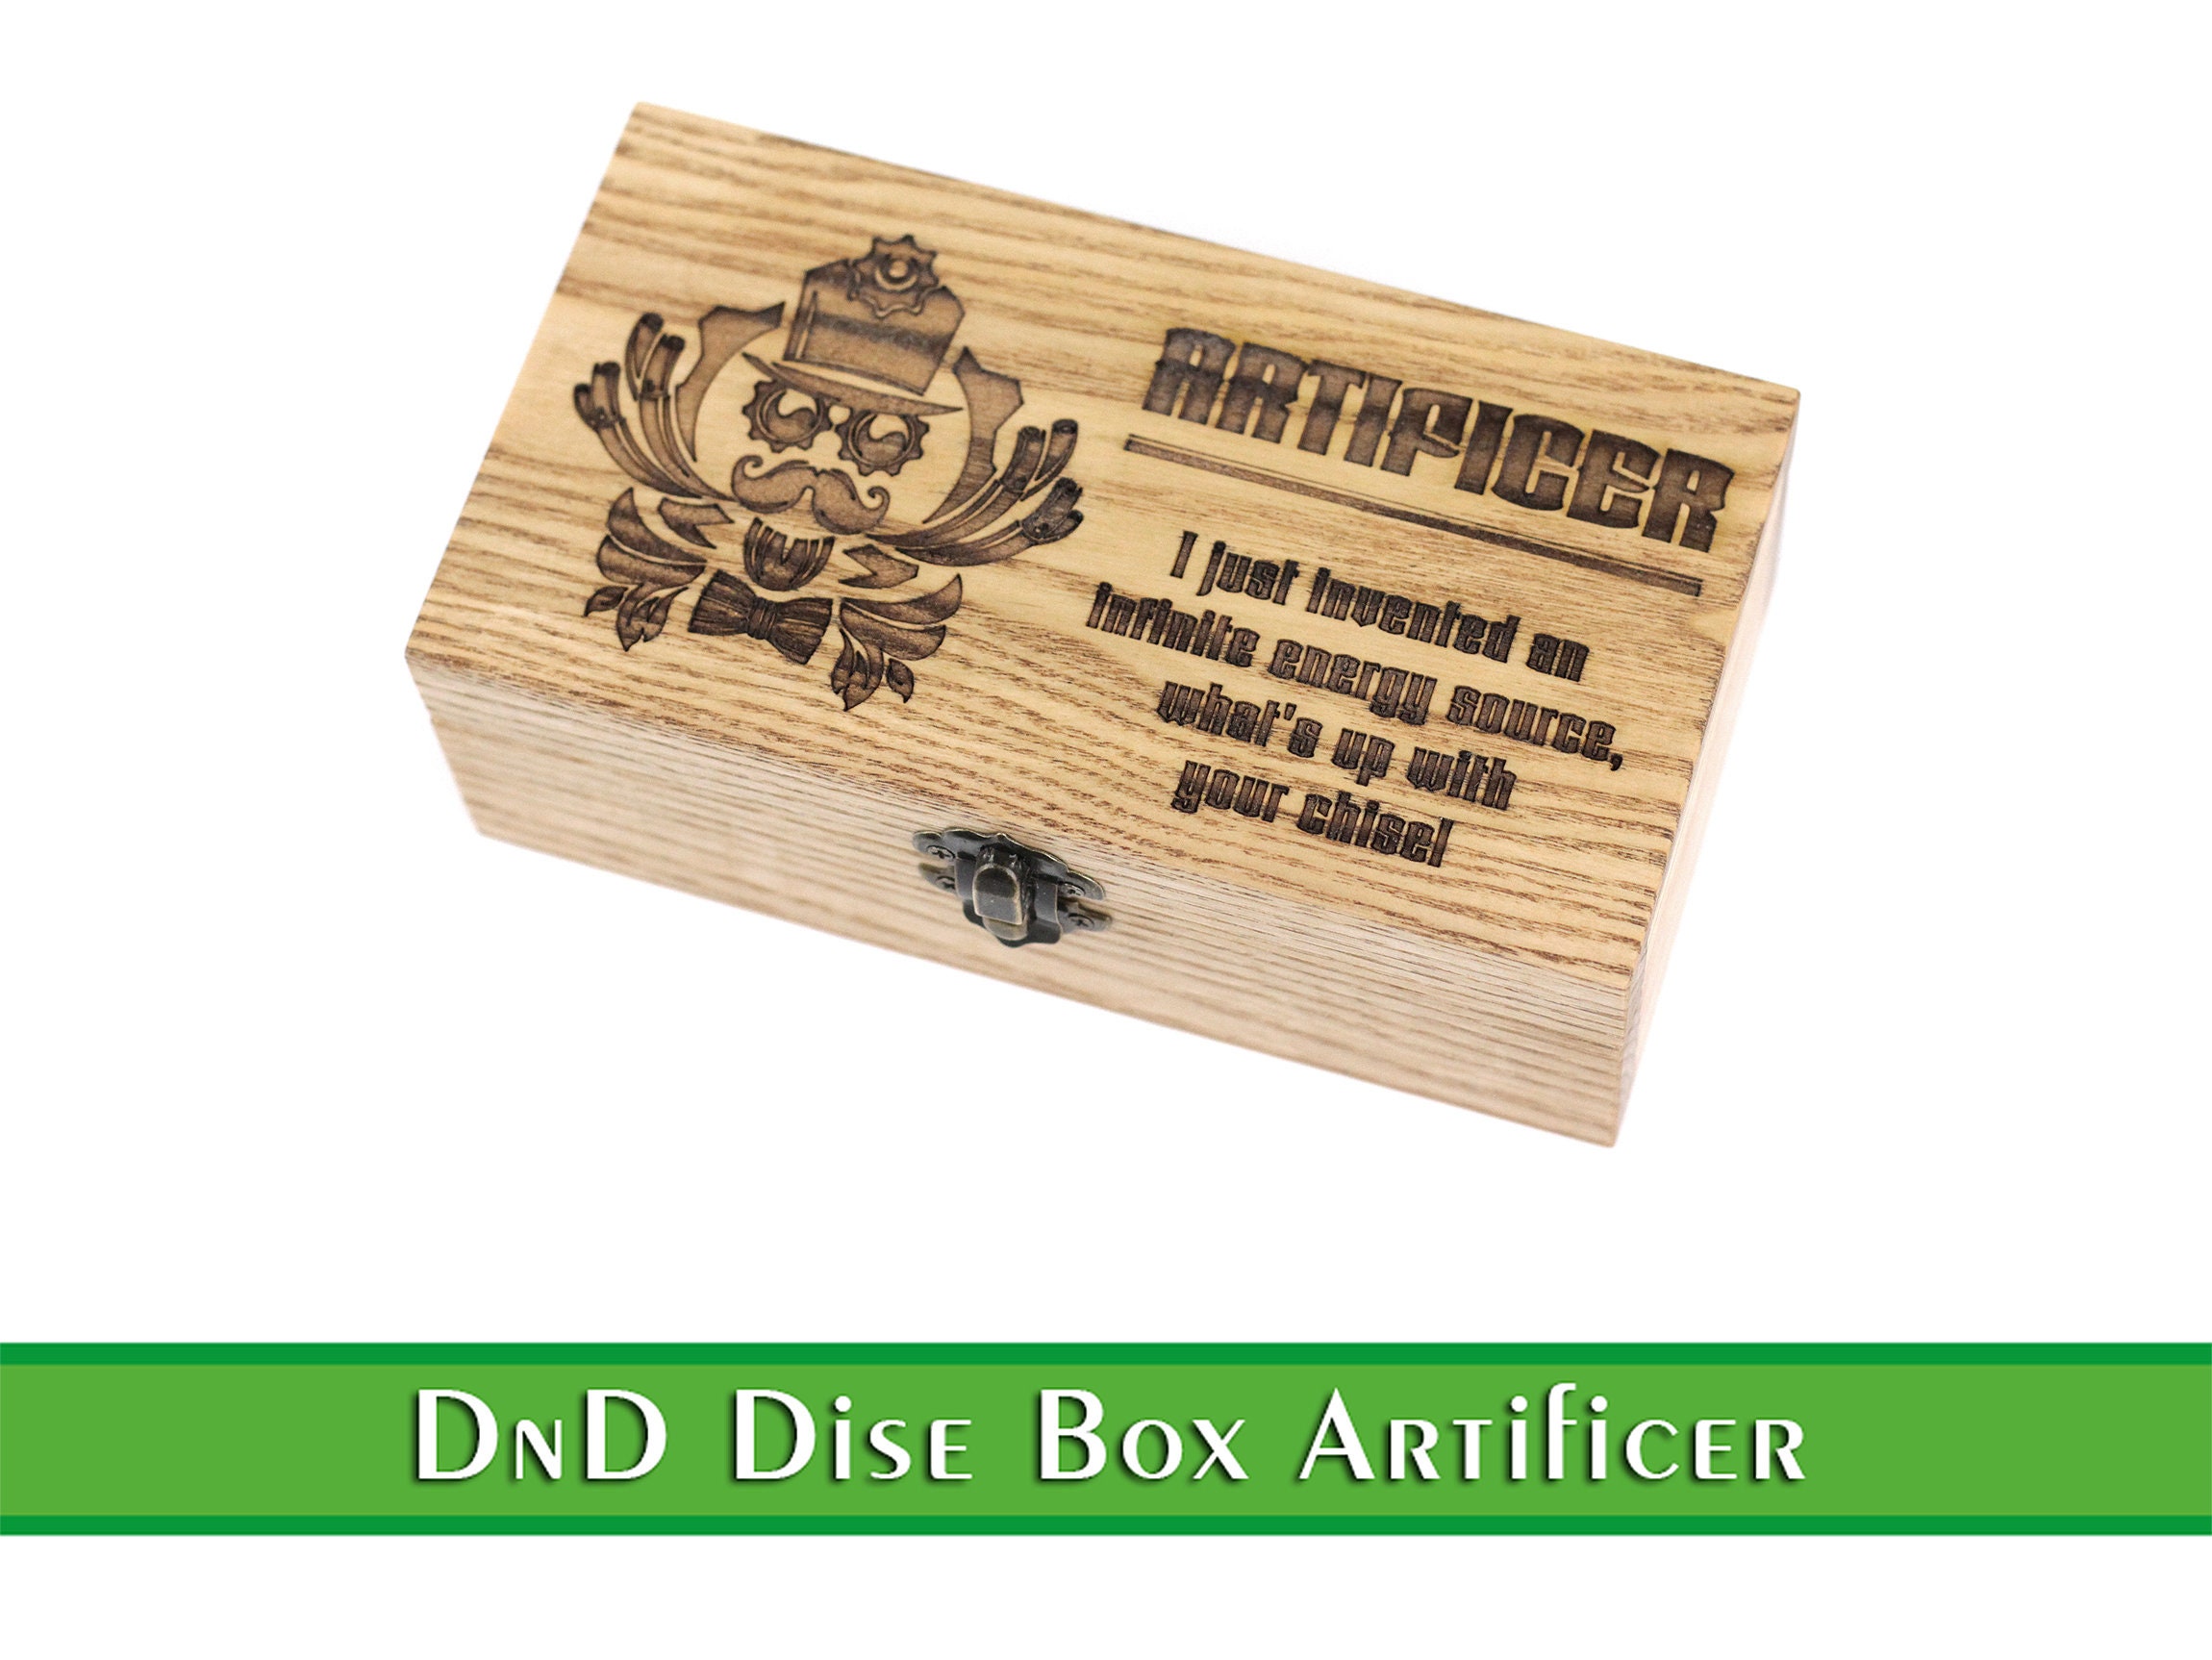 Artisan Wooden DnD Dice Box Artificer Edition Engraved D&D | Etsy